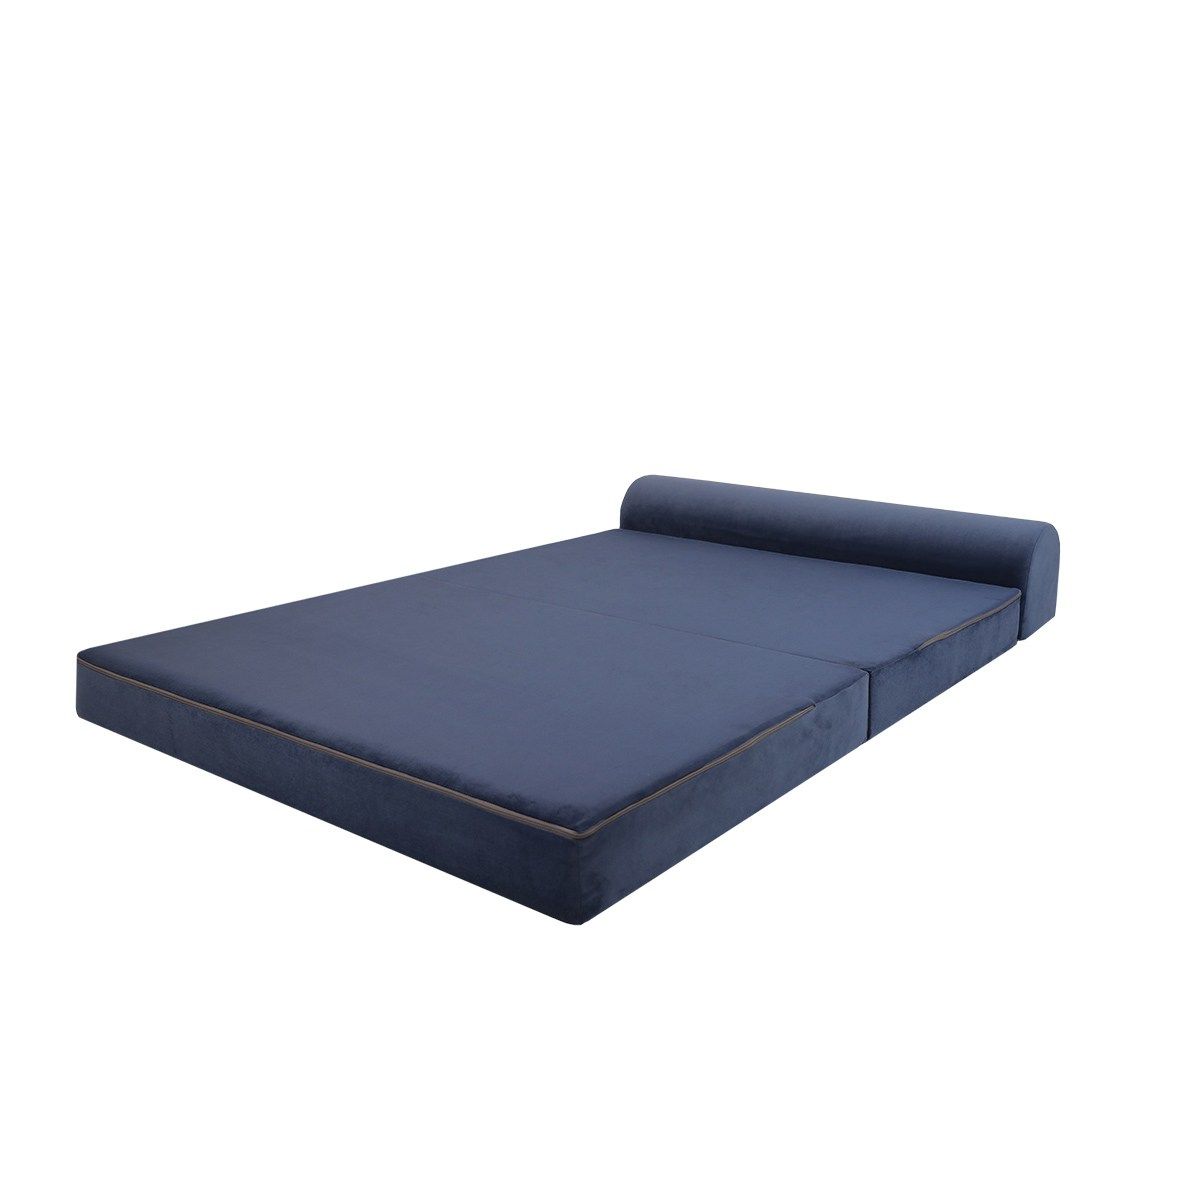 Magic - Blue - 2-Seat Sofa-Bed